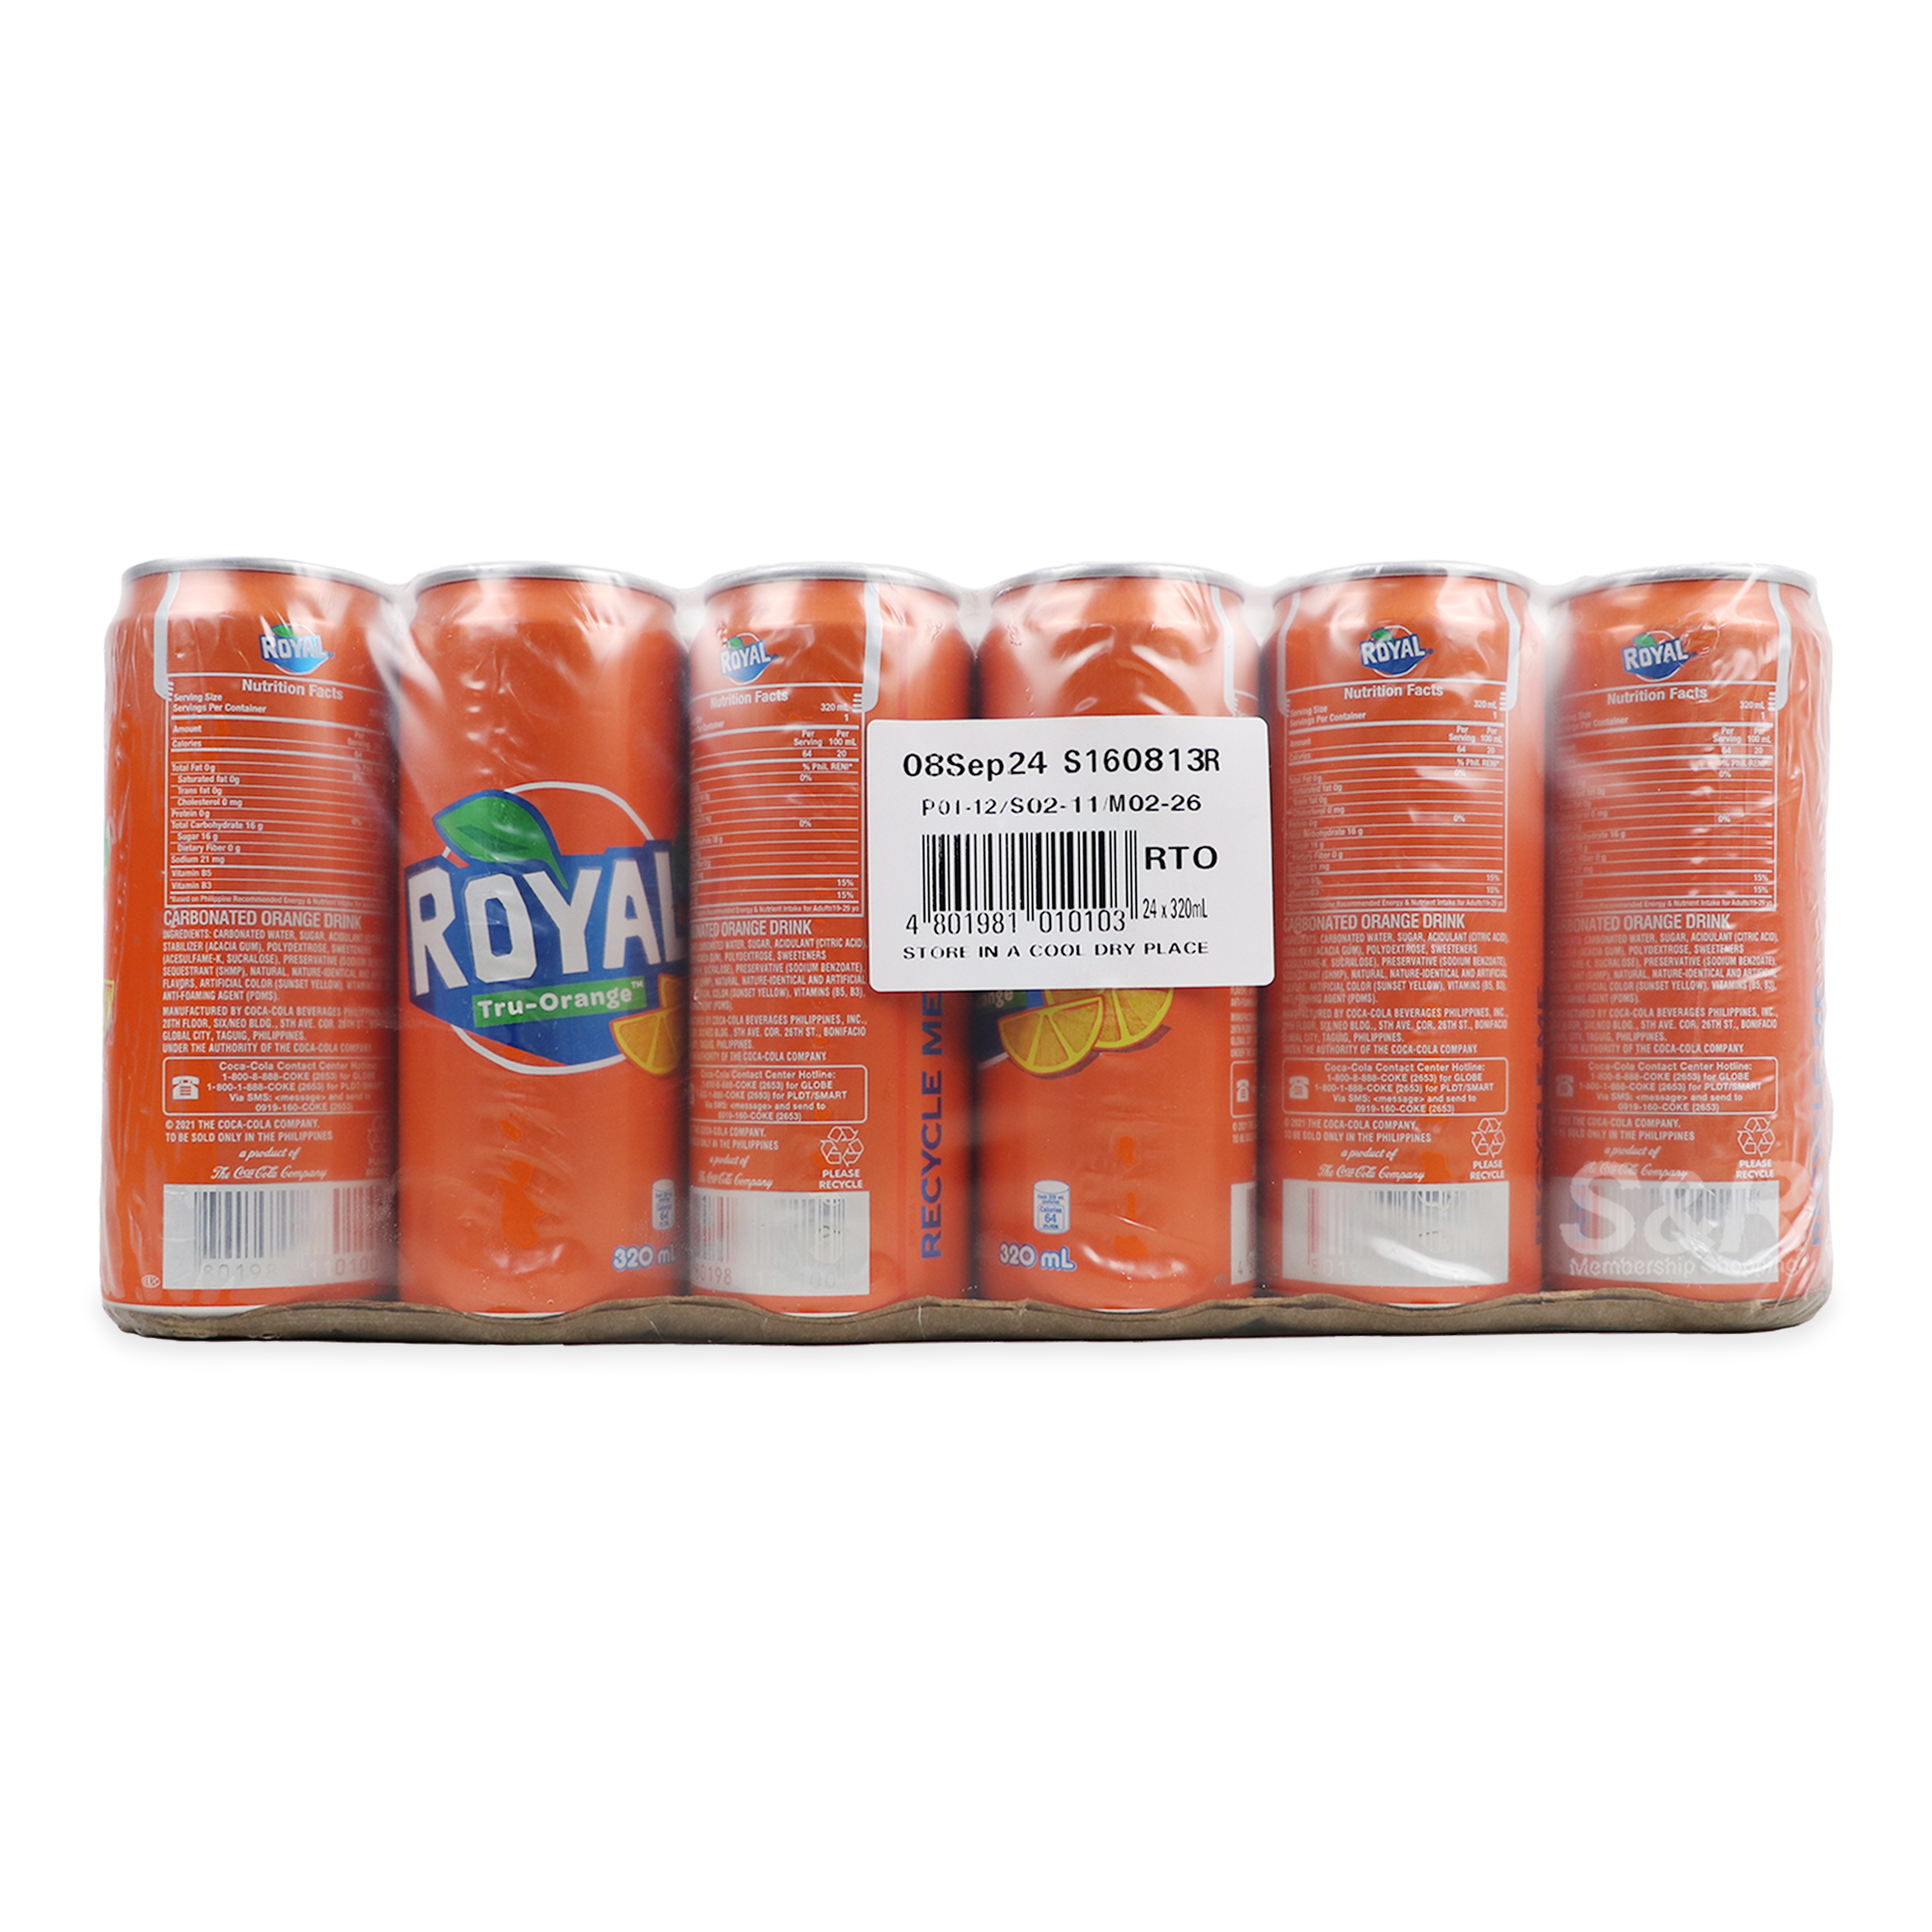 Royal Tru-Orange 24x320mL